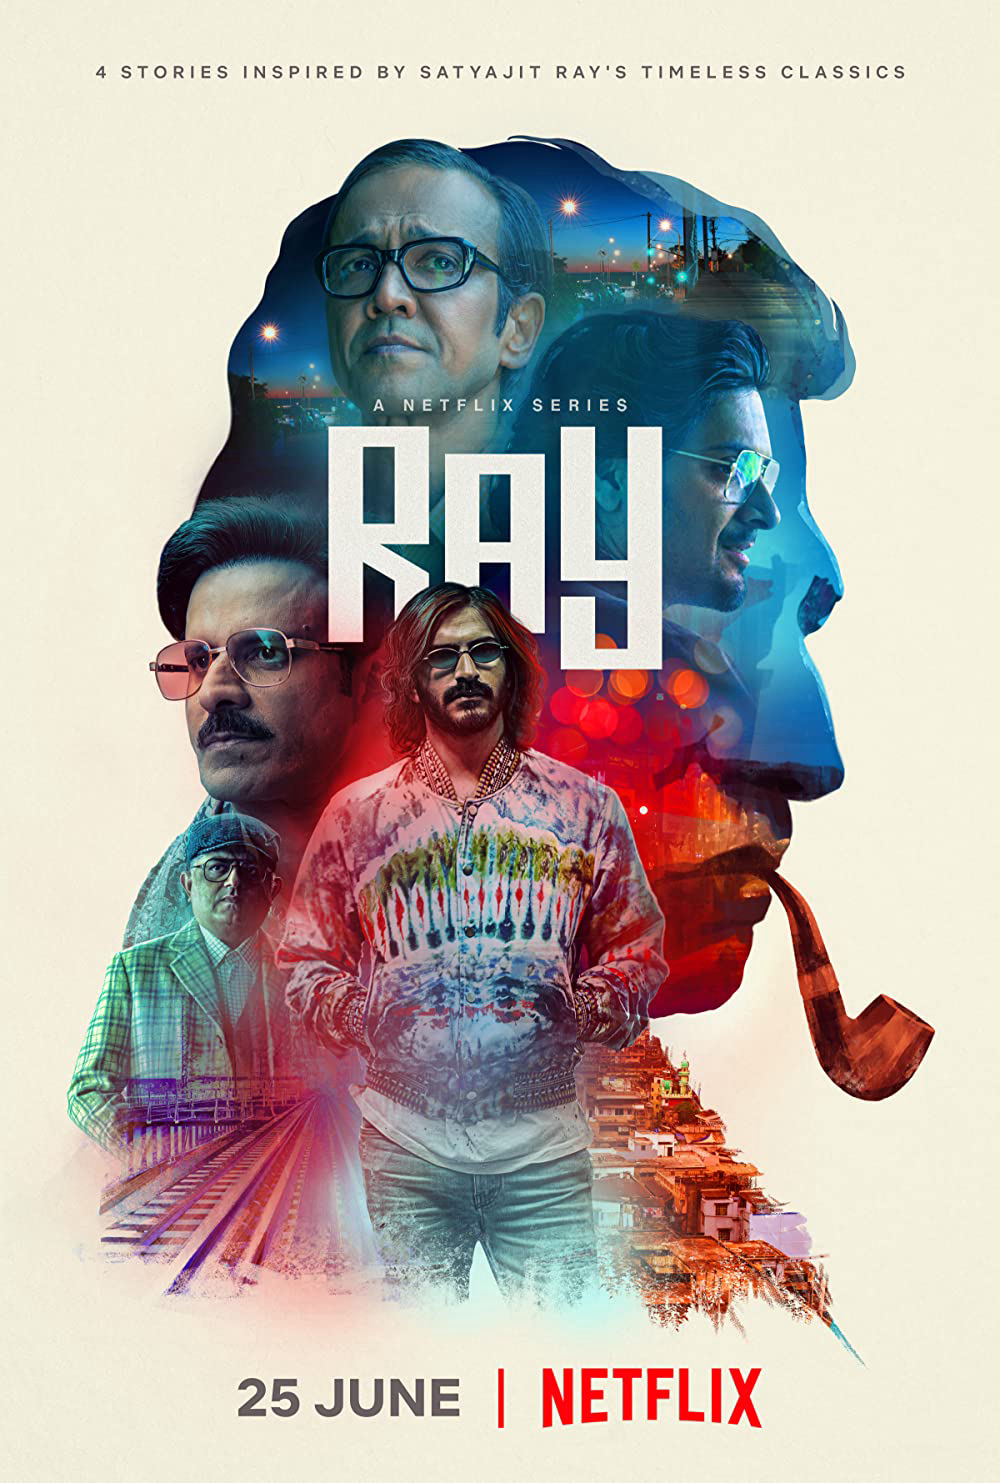 Satyajit Ray - Ray